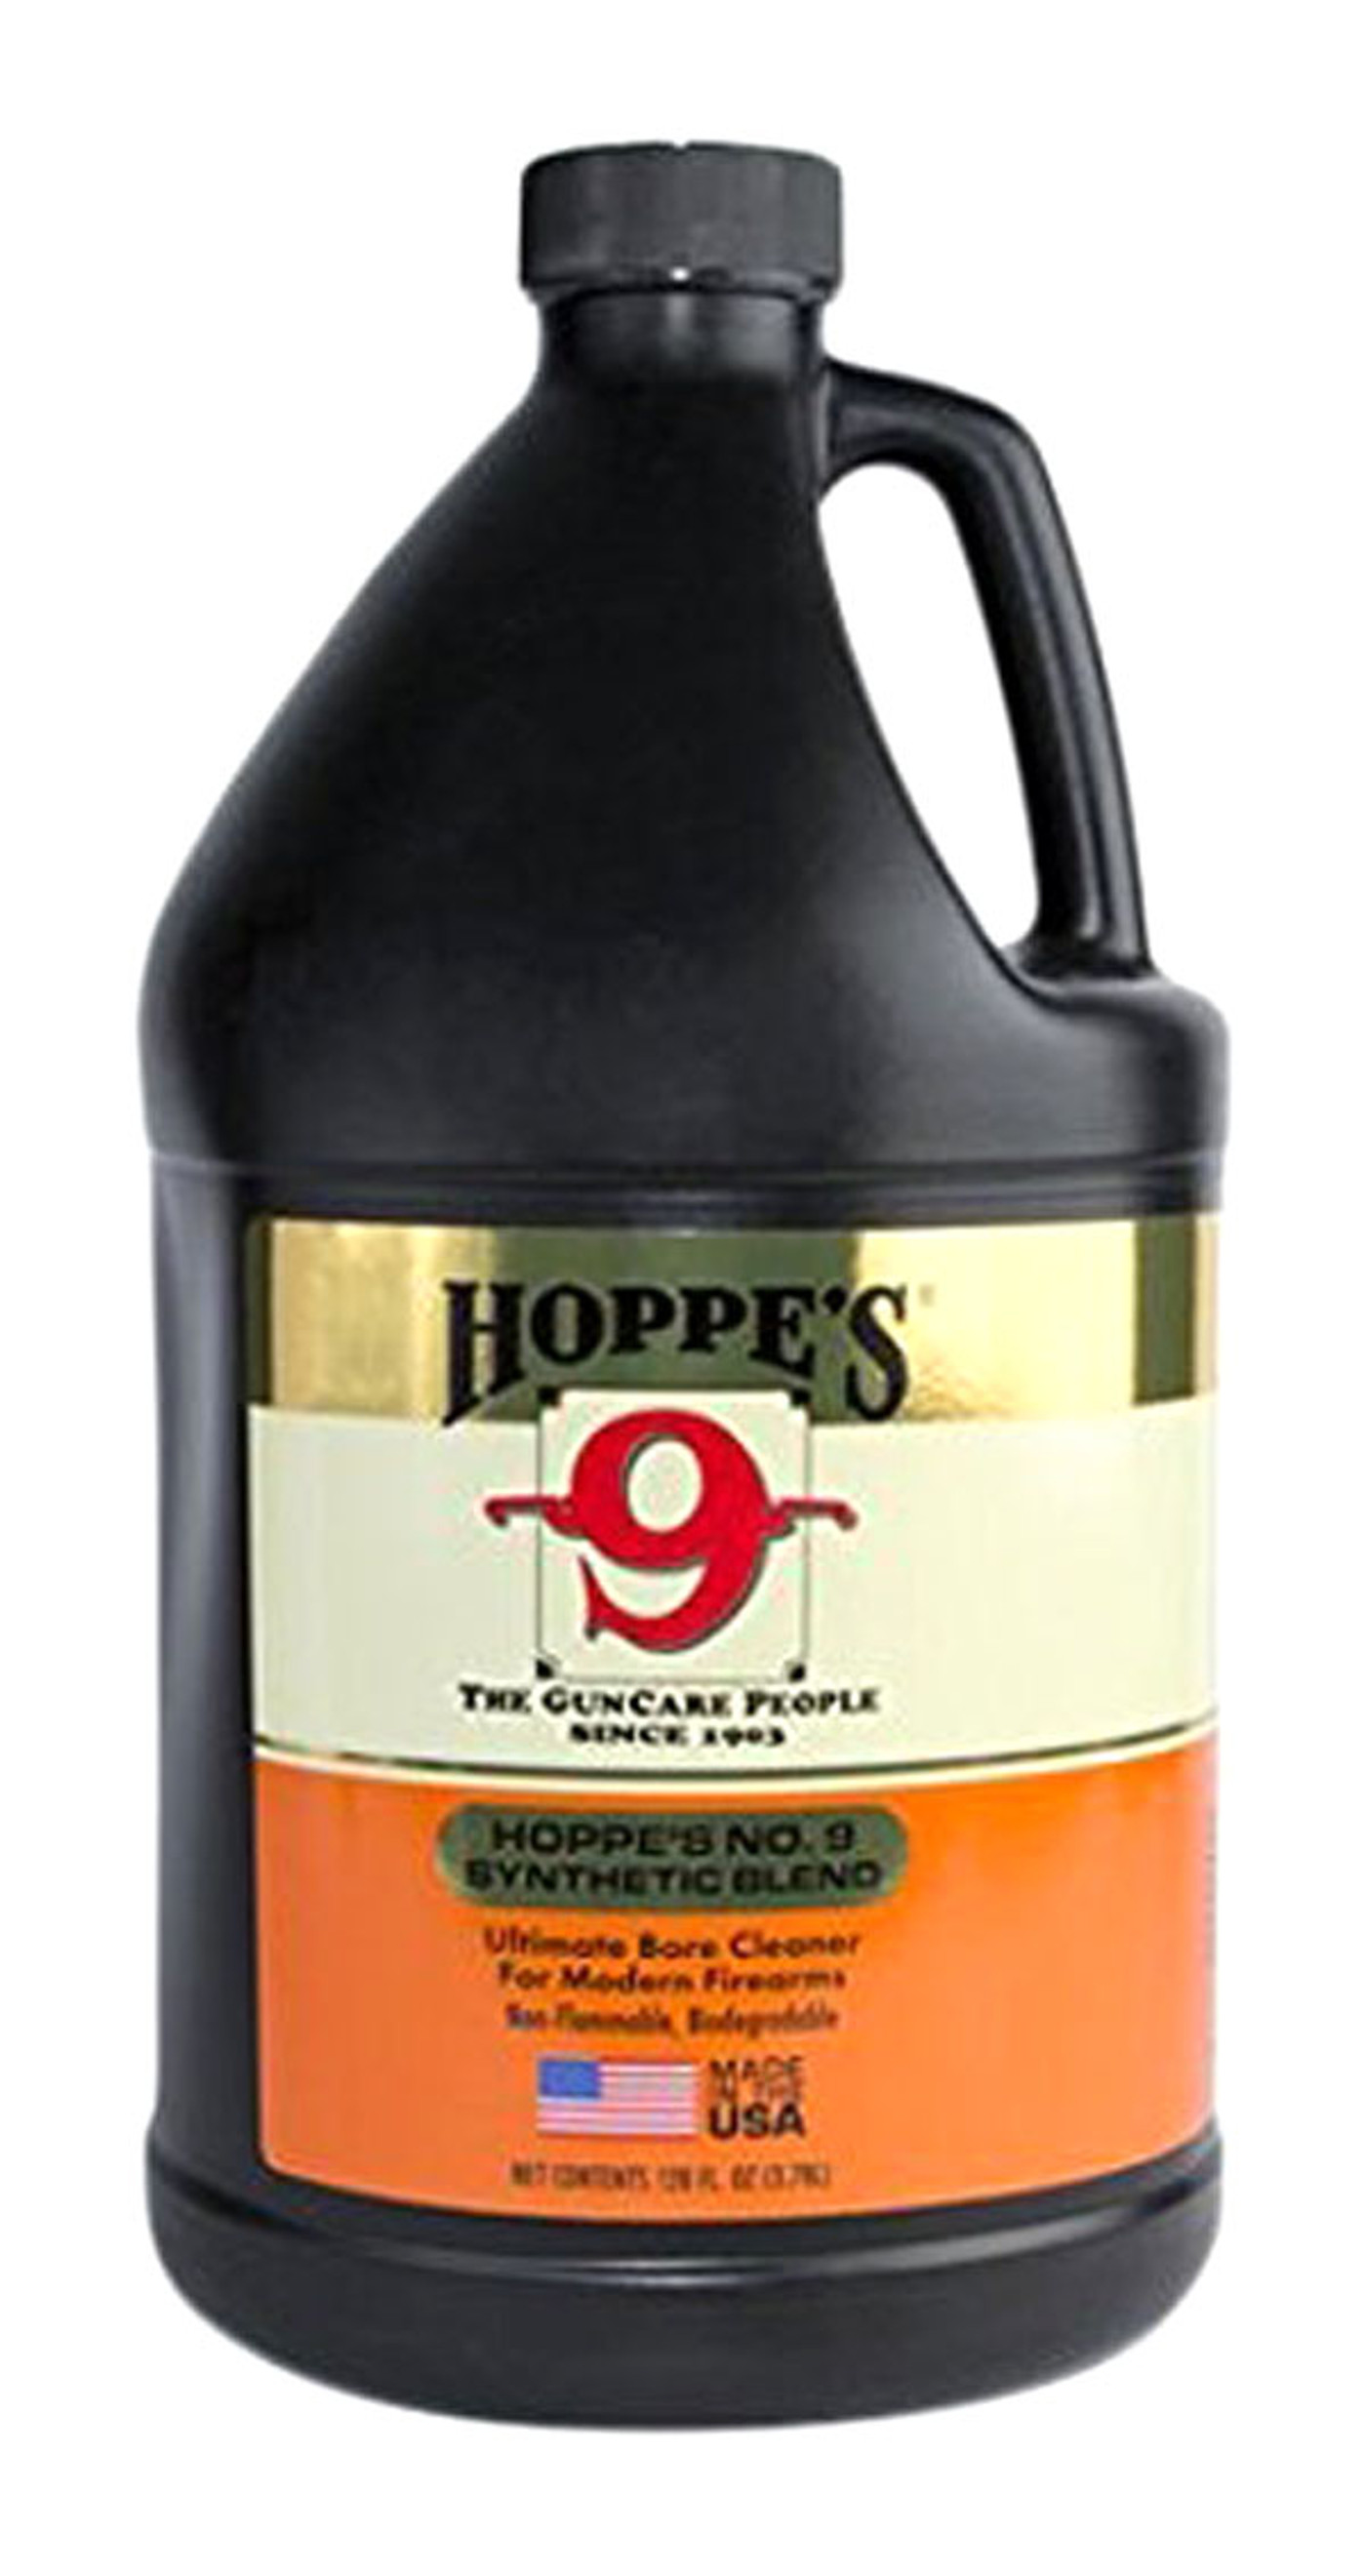 Hoppe'S #9 Synthetic Blend Gallon